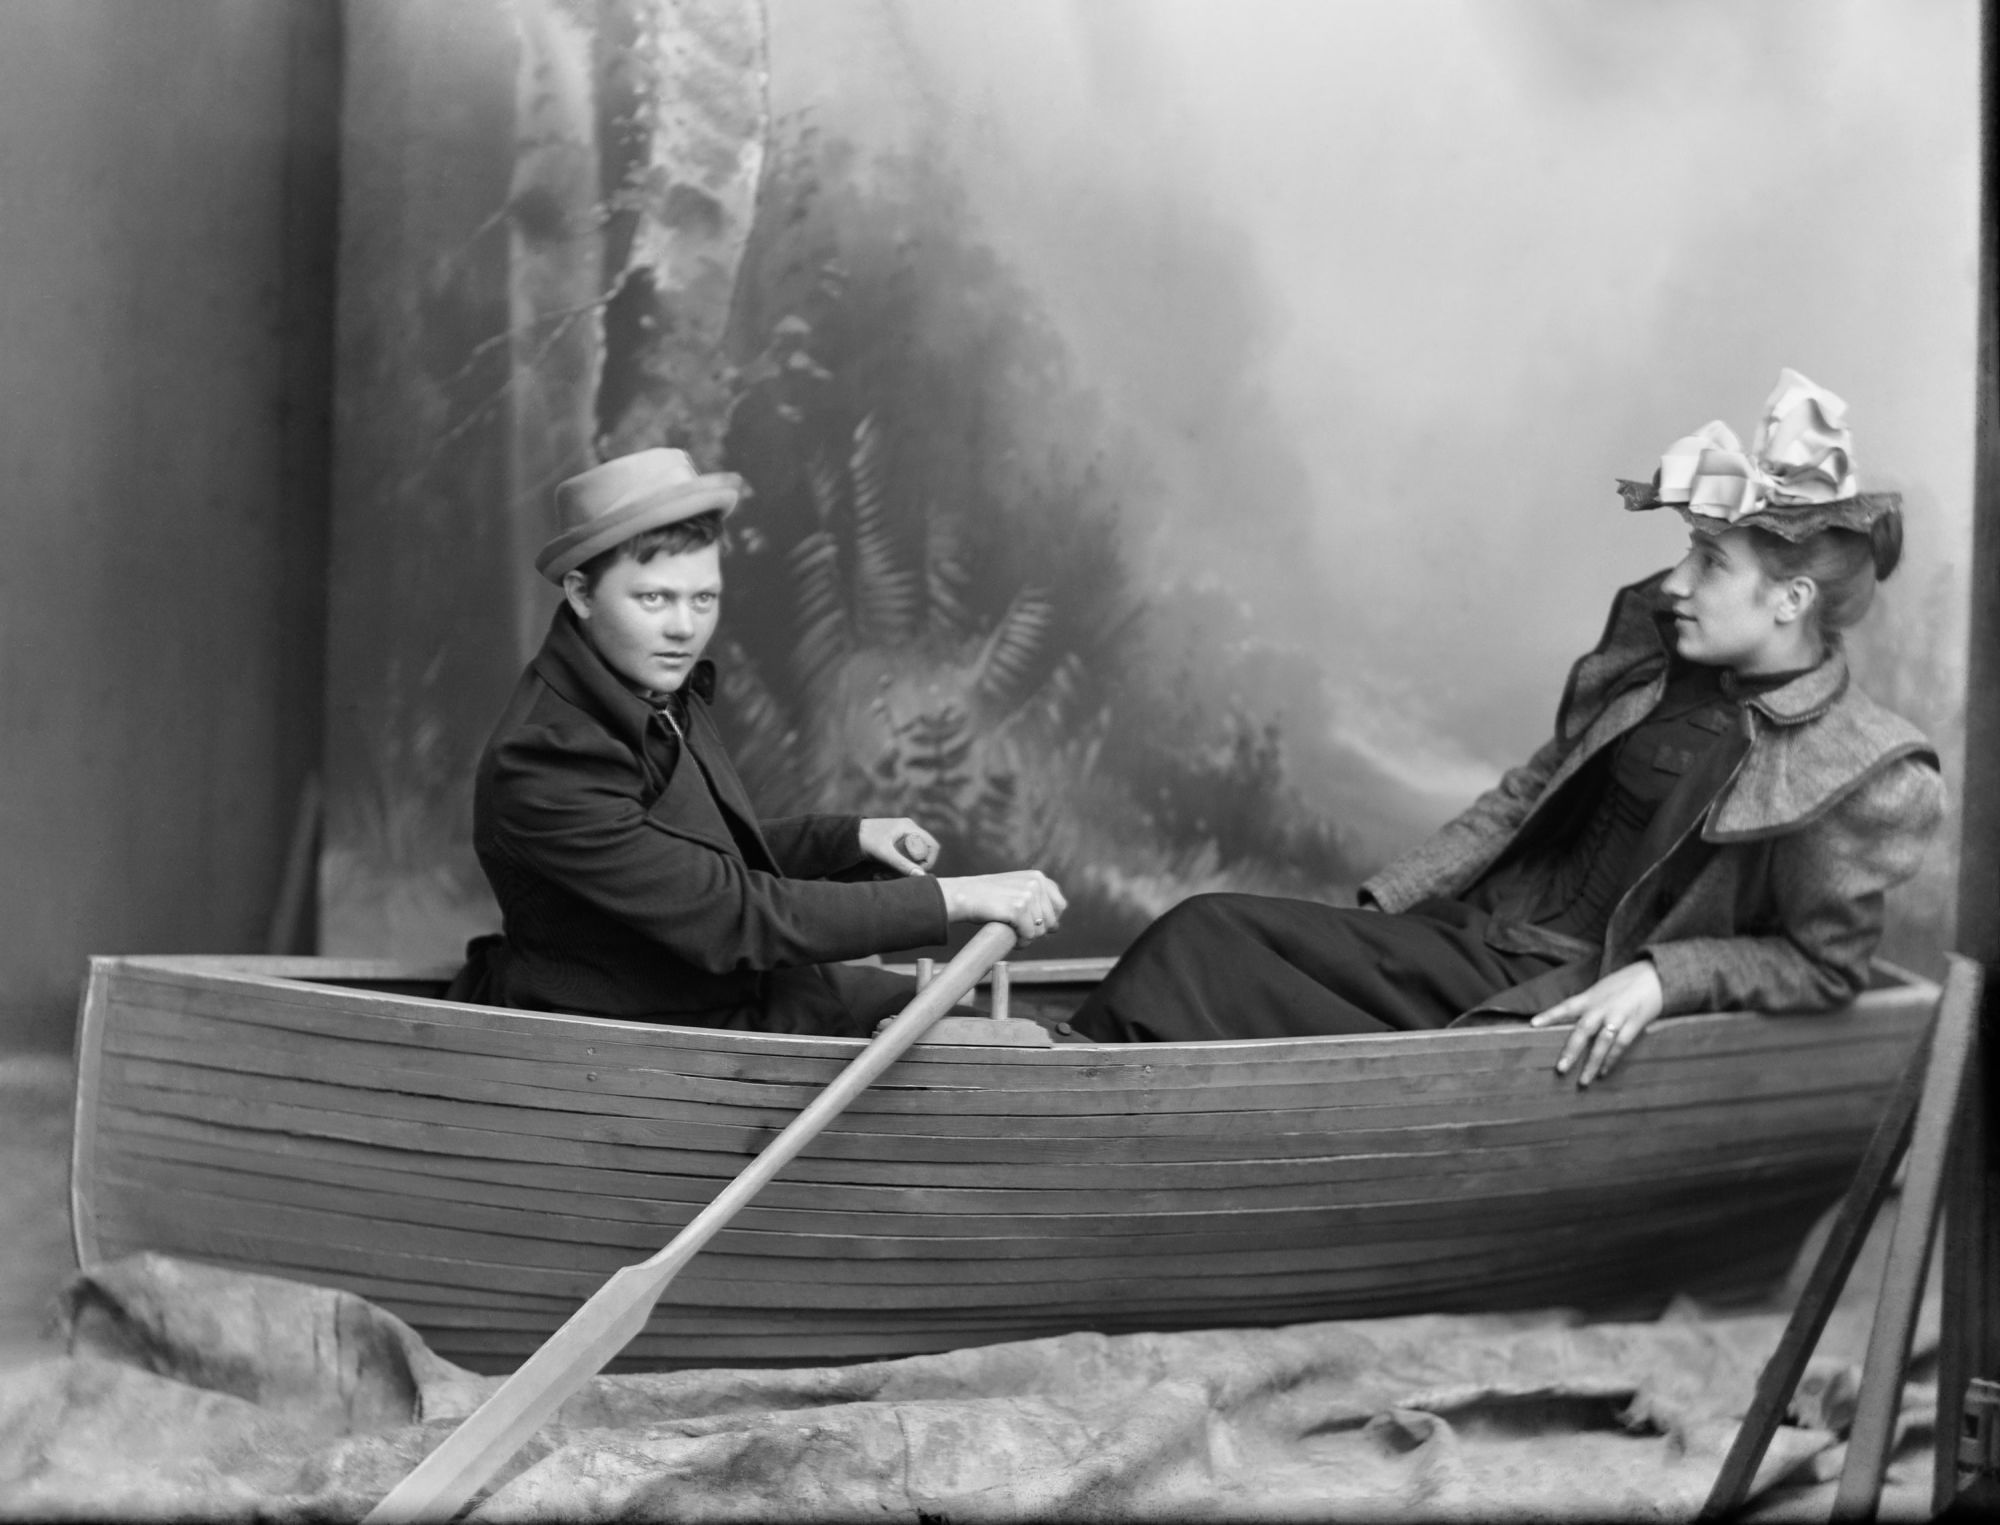 Berg & Høeg, "Water scene". Marie Høeg and Bolette Berg in a rowing boat in the studio, 1894-1903.